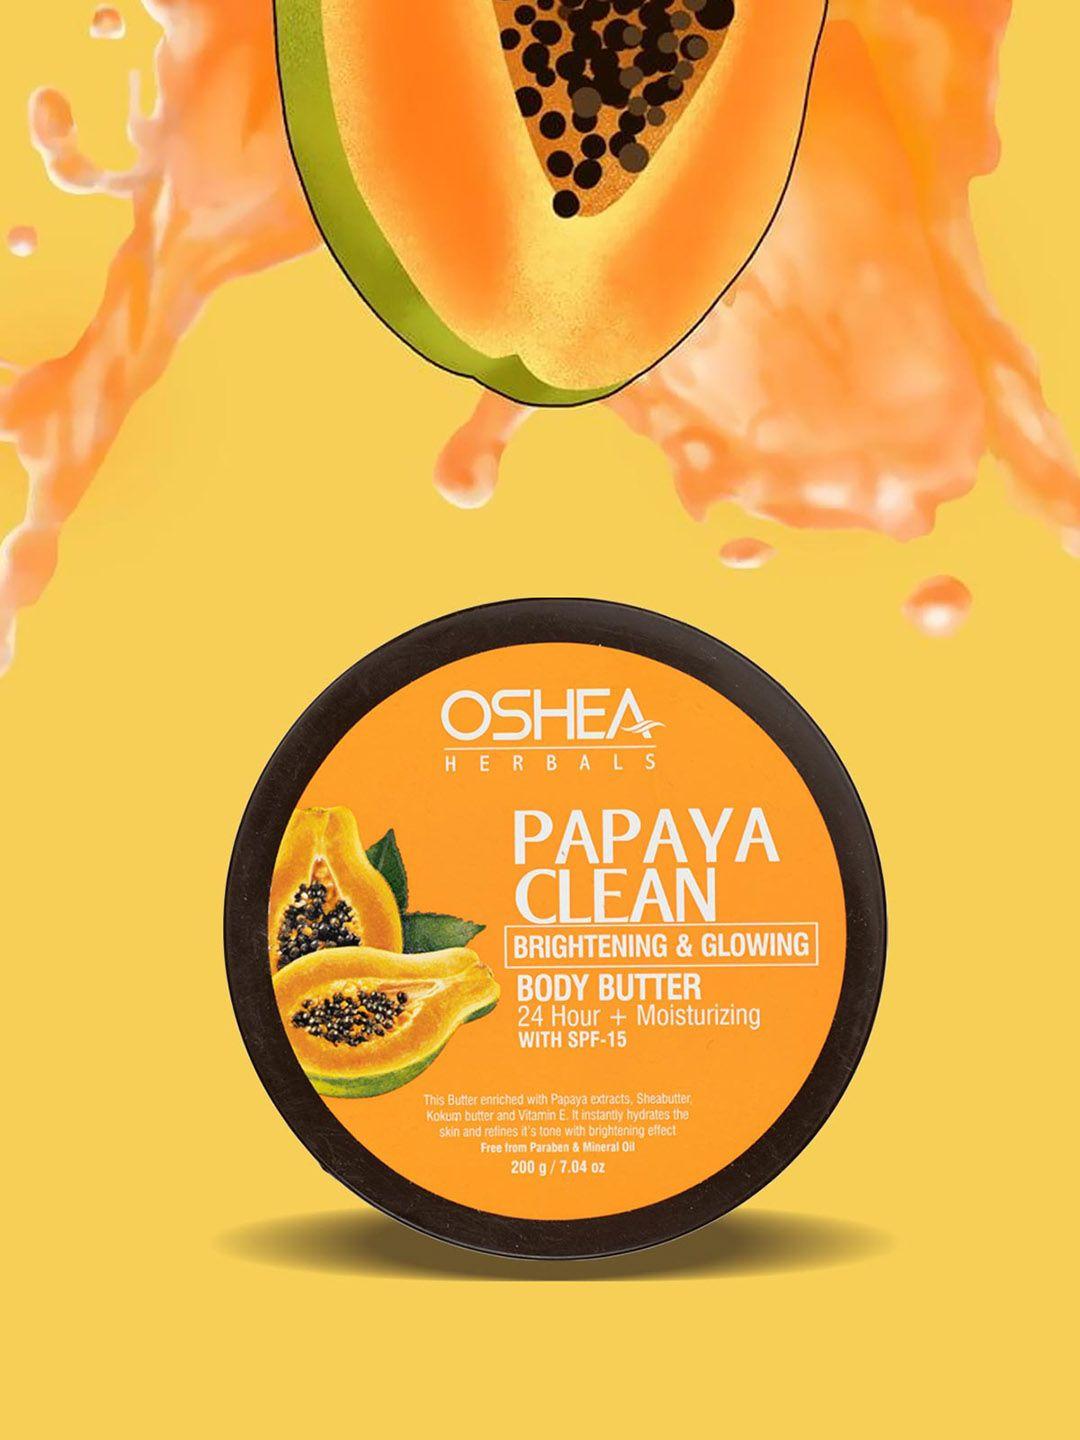 oshea herbals pack of 2 papaya clean body butter